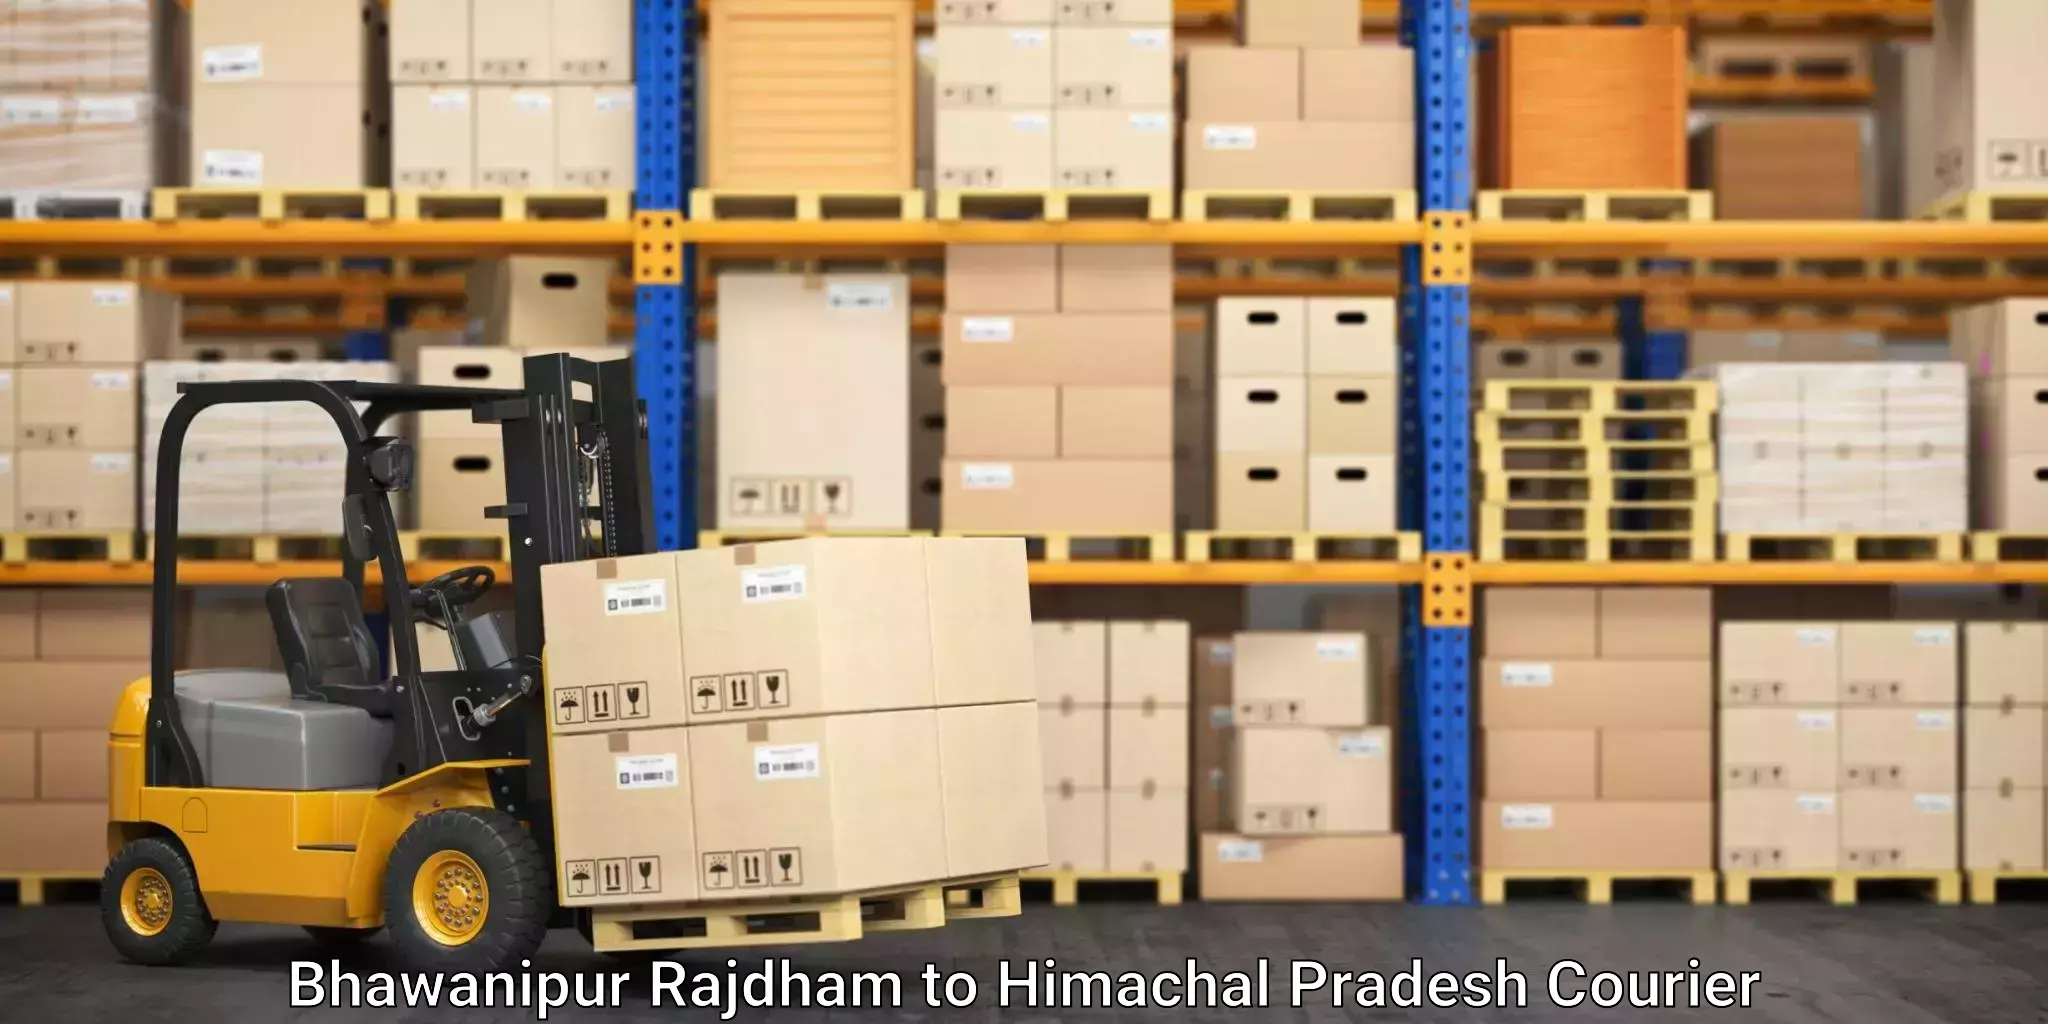 Furniture moving specialists Bhawanipur Rajdham to Himachal Pradesh